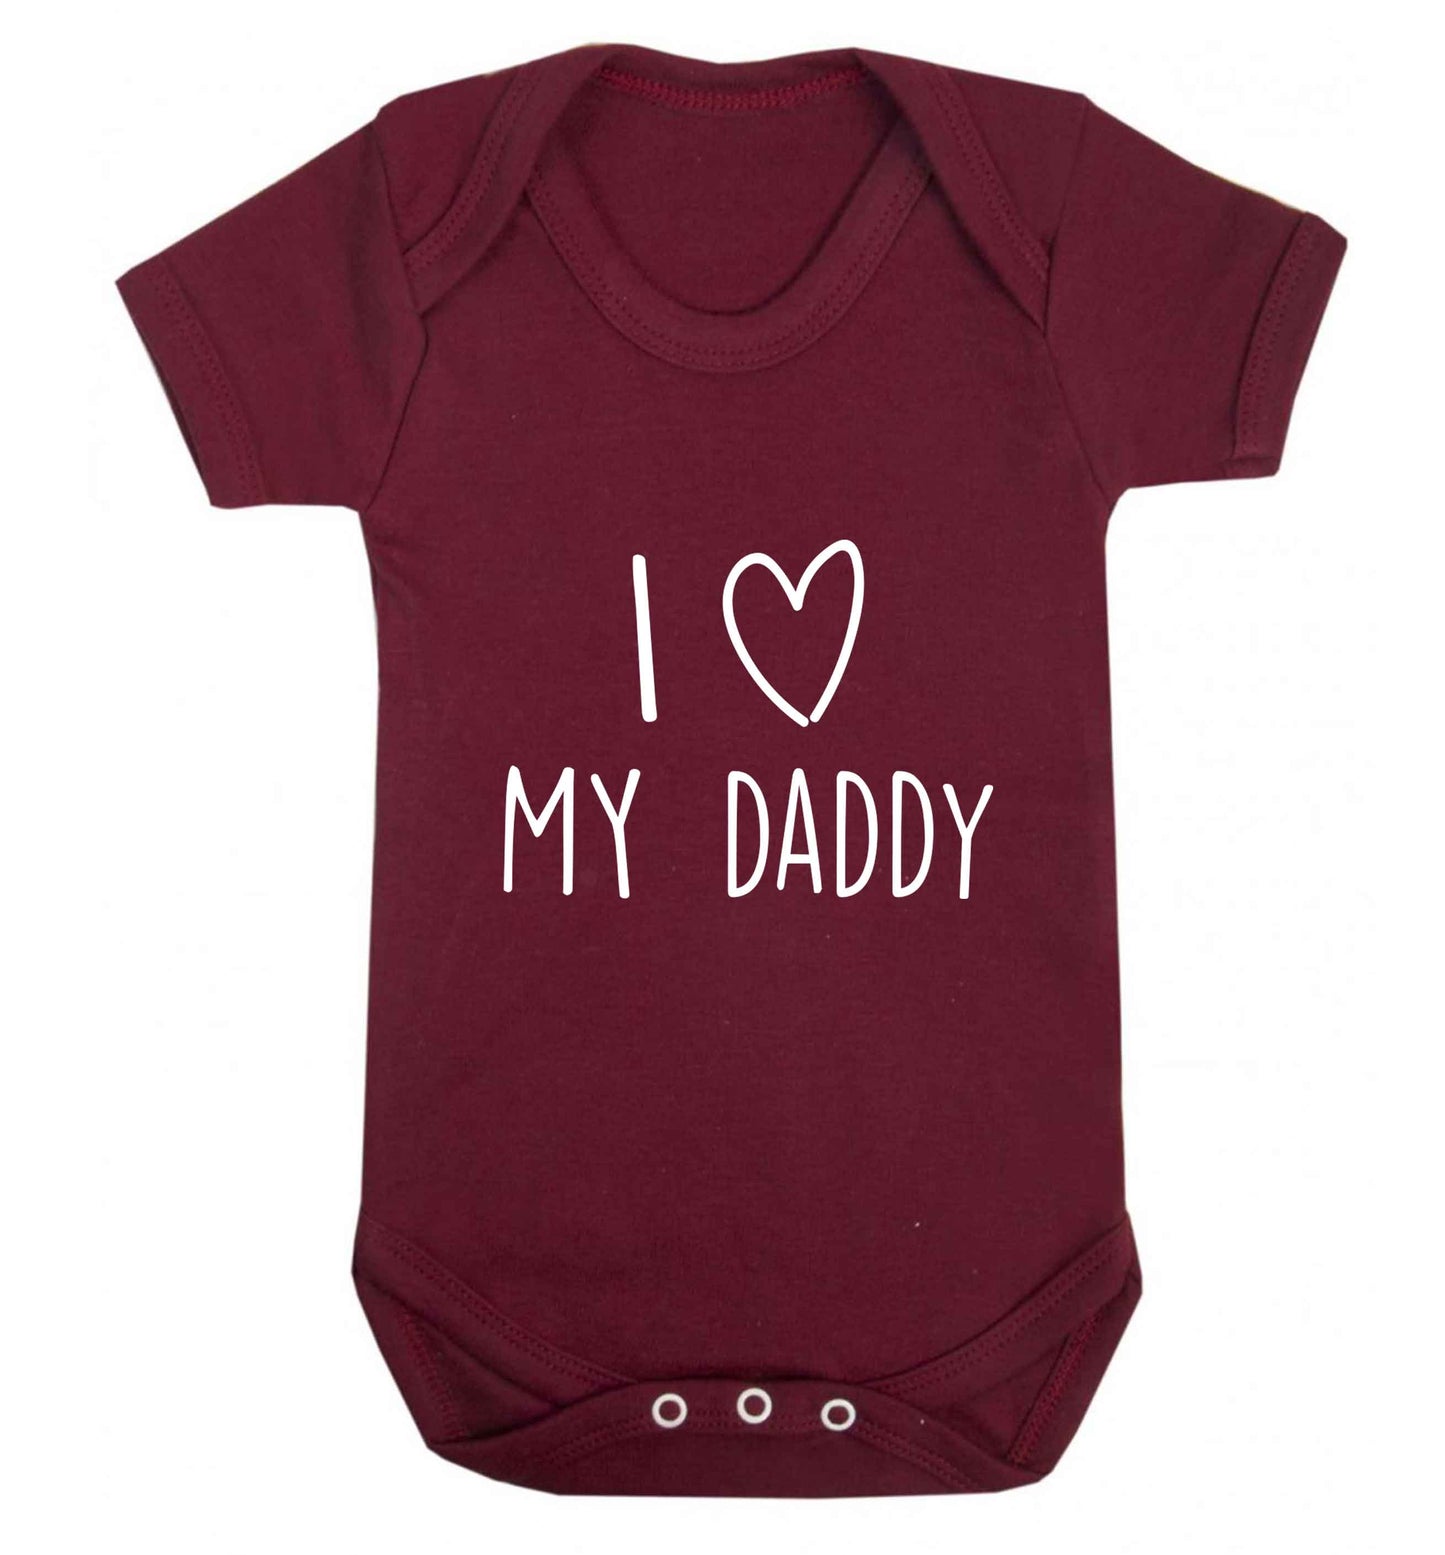 I love my daddy baby vest maroon 18-24 months